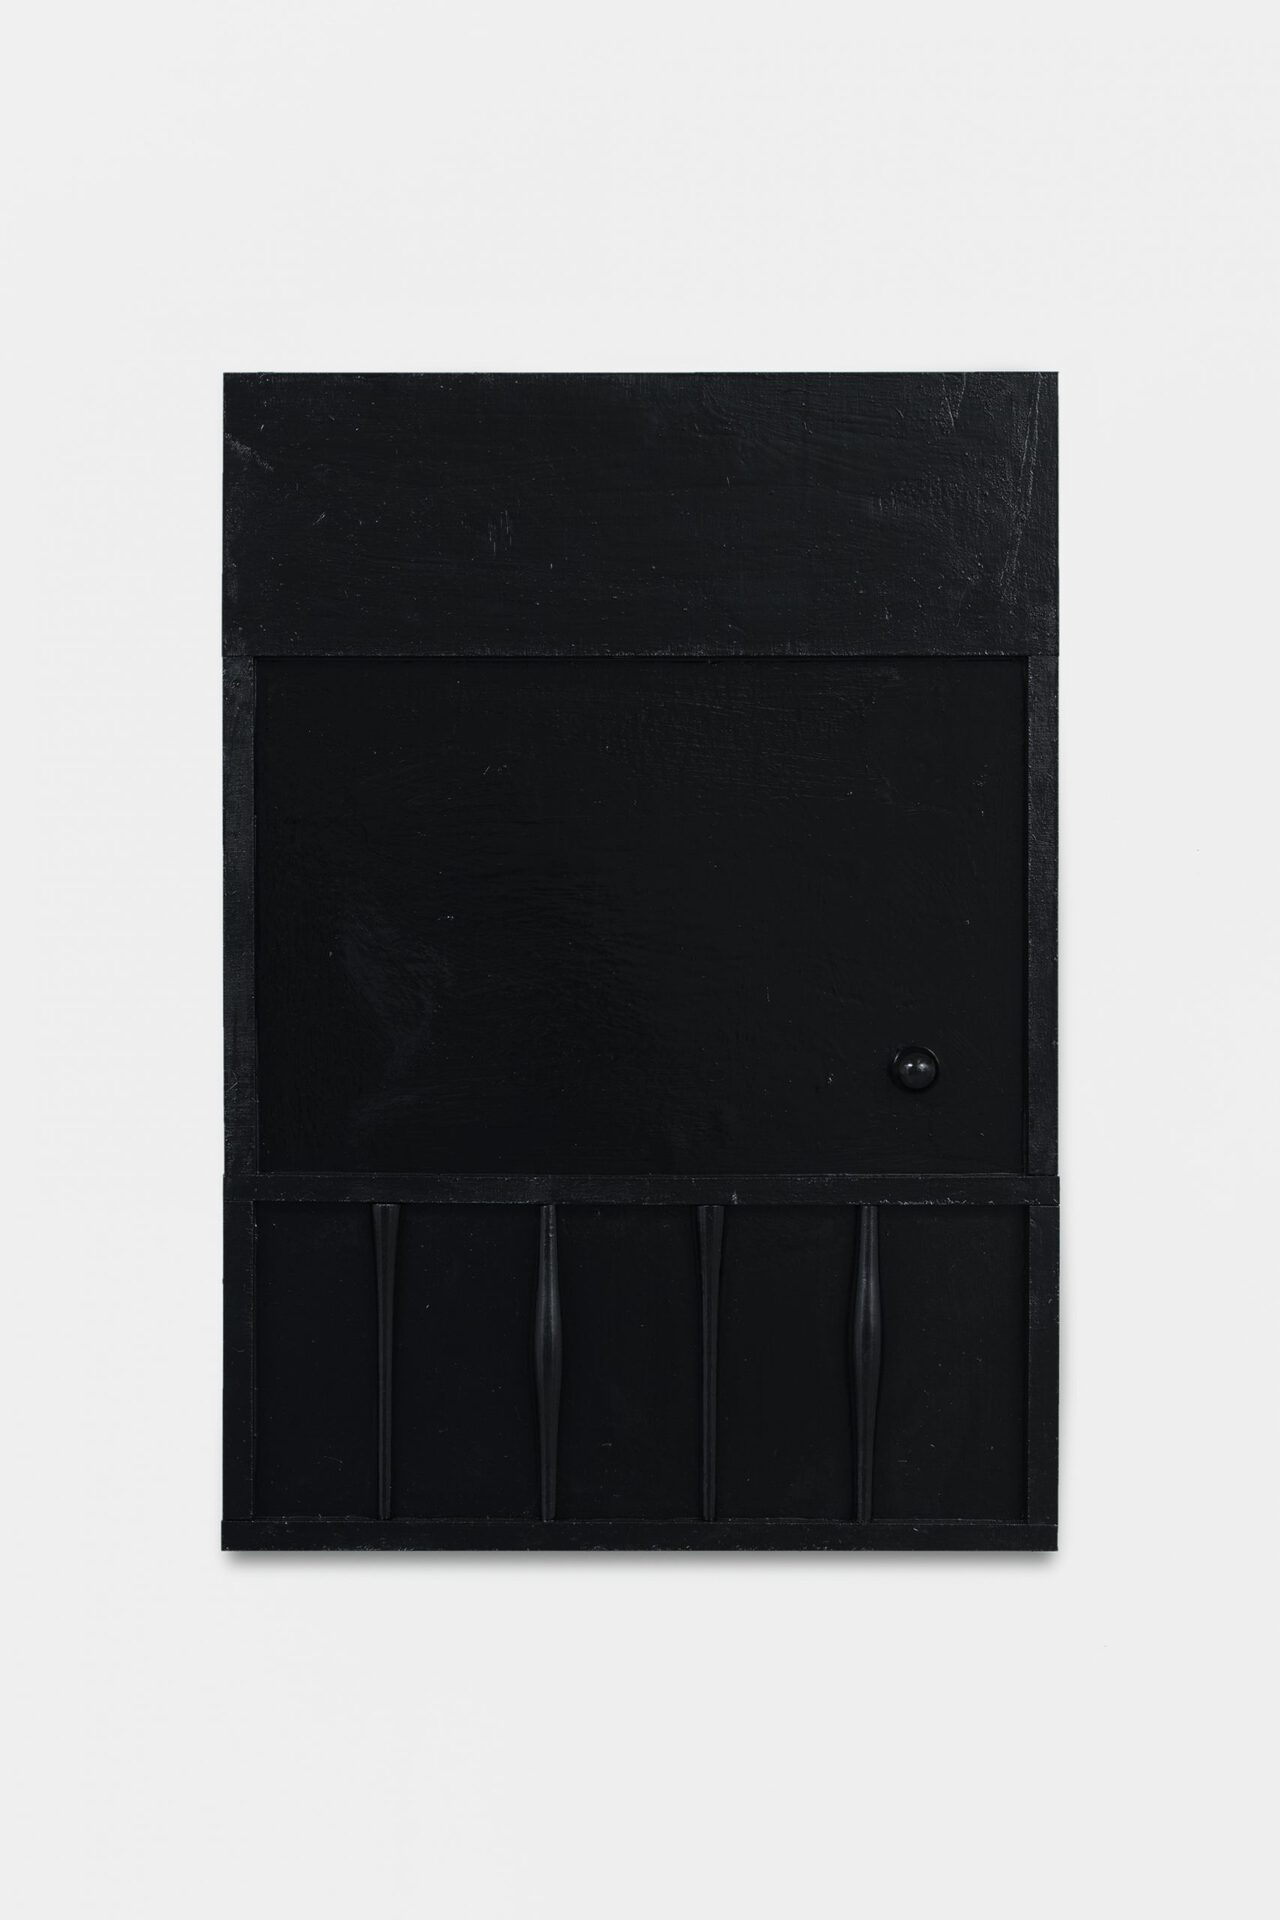 Jordan Derrien, FUCK THE TELEPHONE COMPANY, 2020, Wood, paint, glue, 60x84 cm.